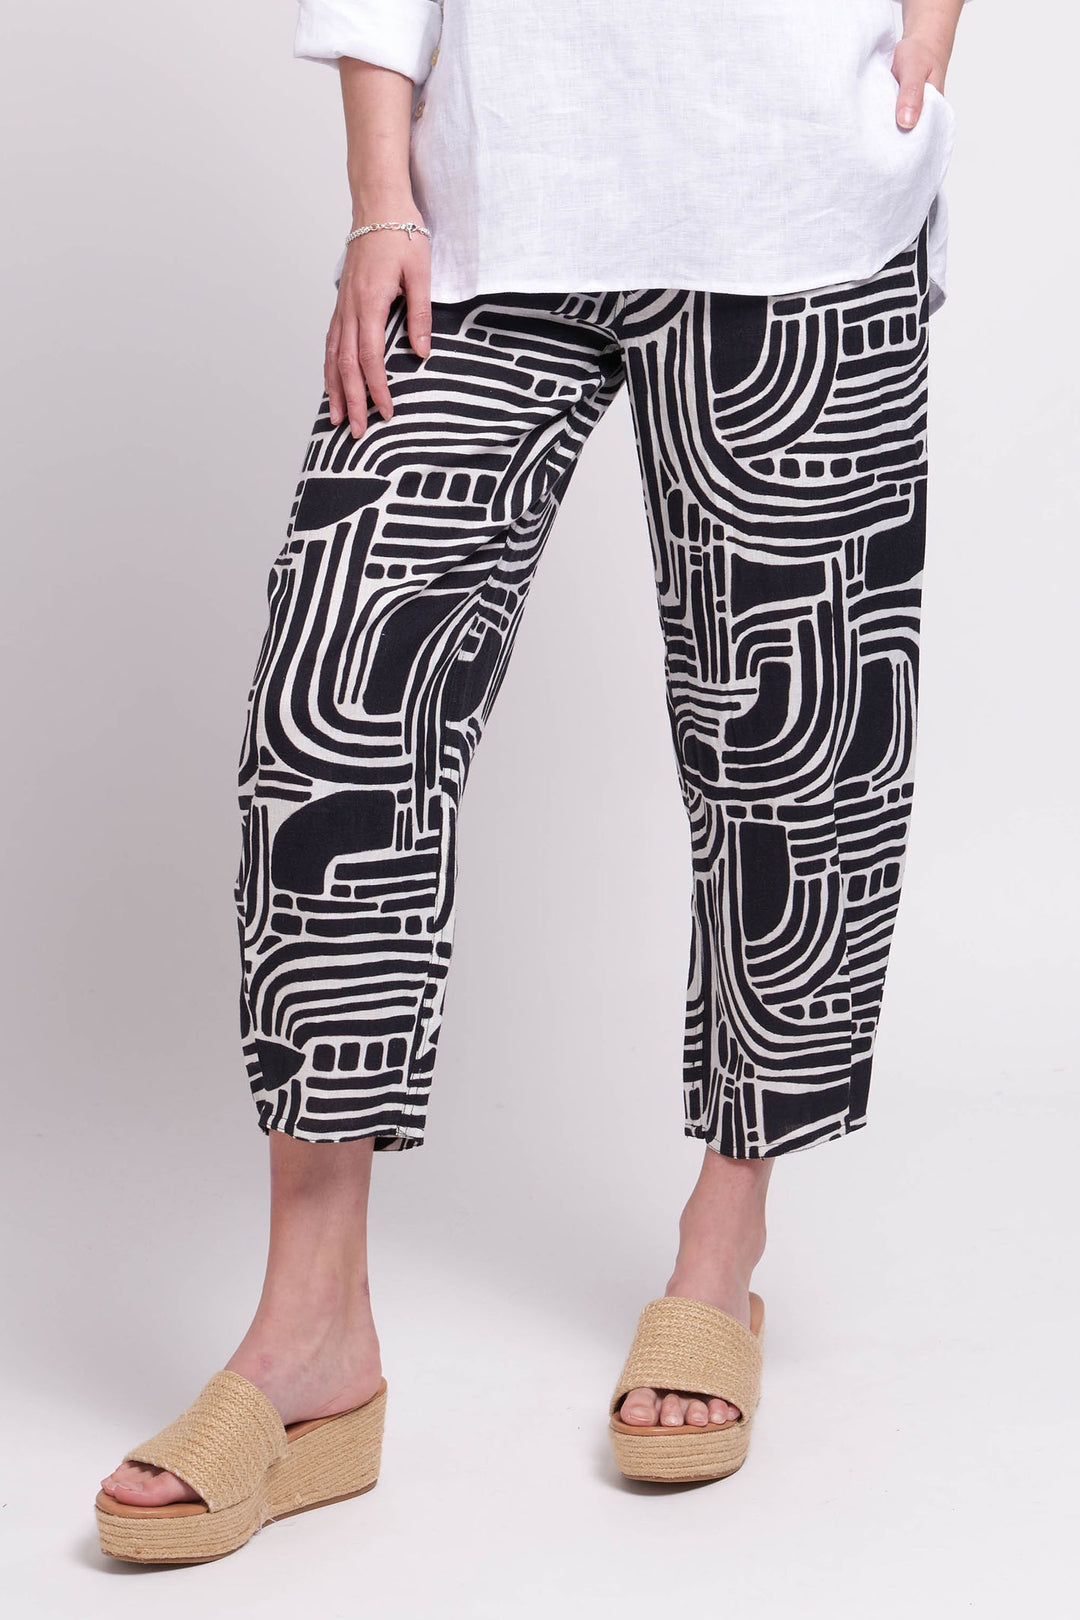 Foil 7481 A-mazing Black White Print Up & Away Linen Trousers